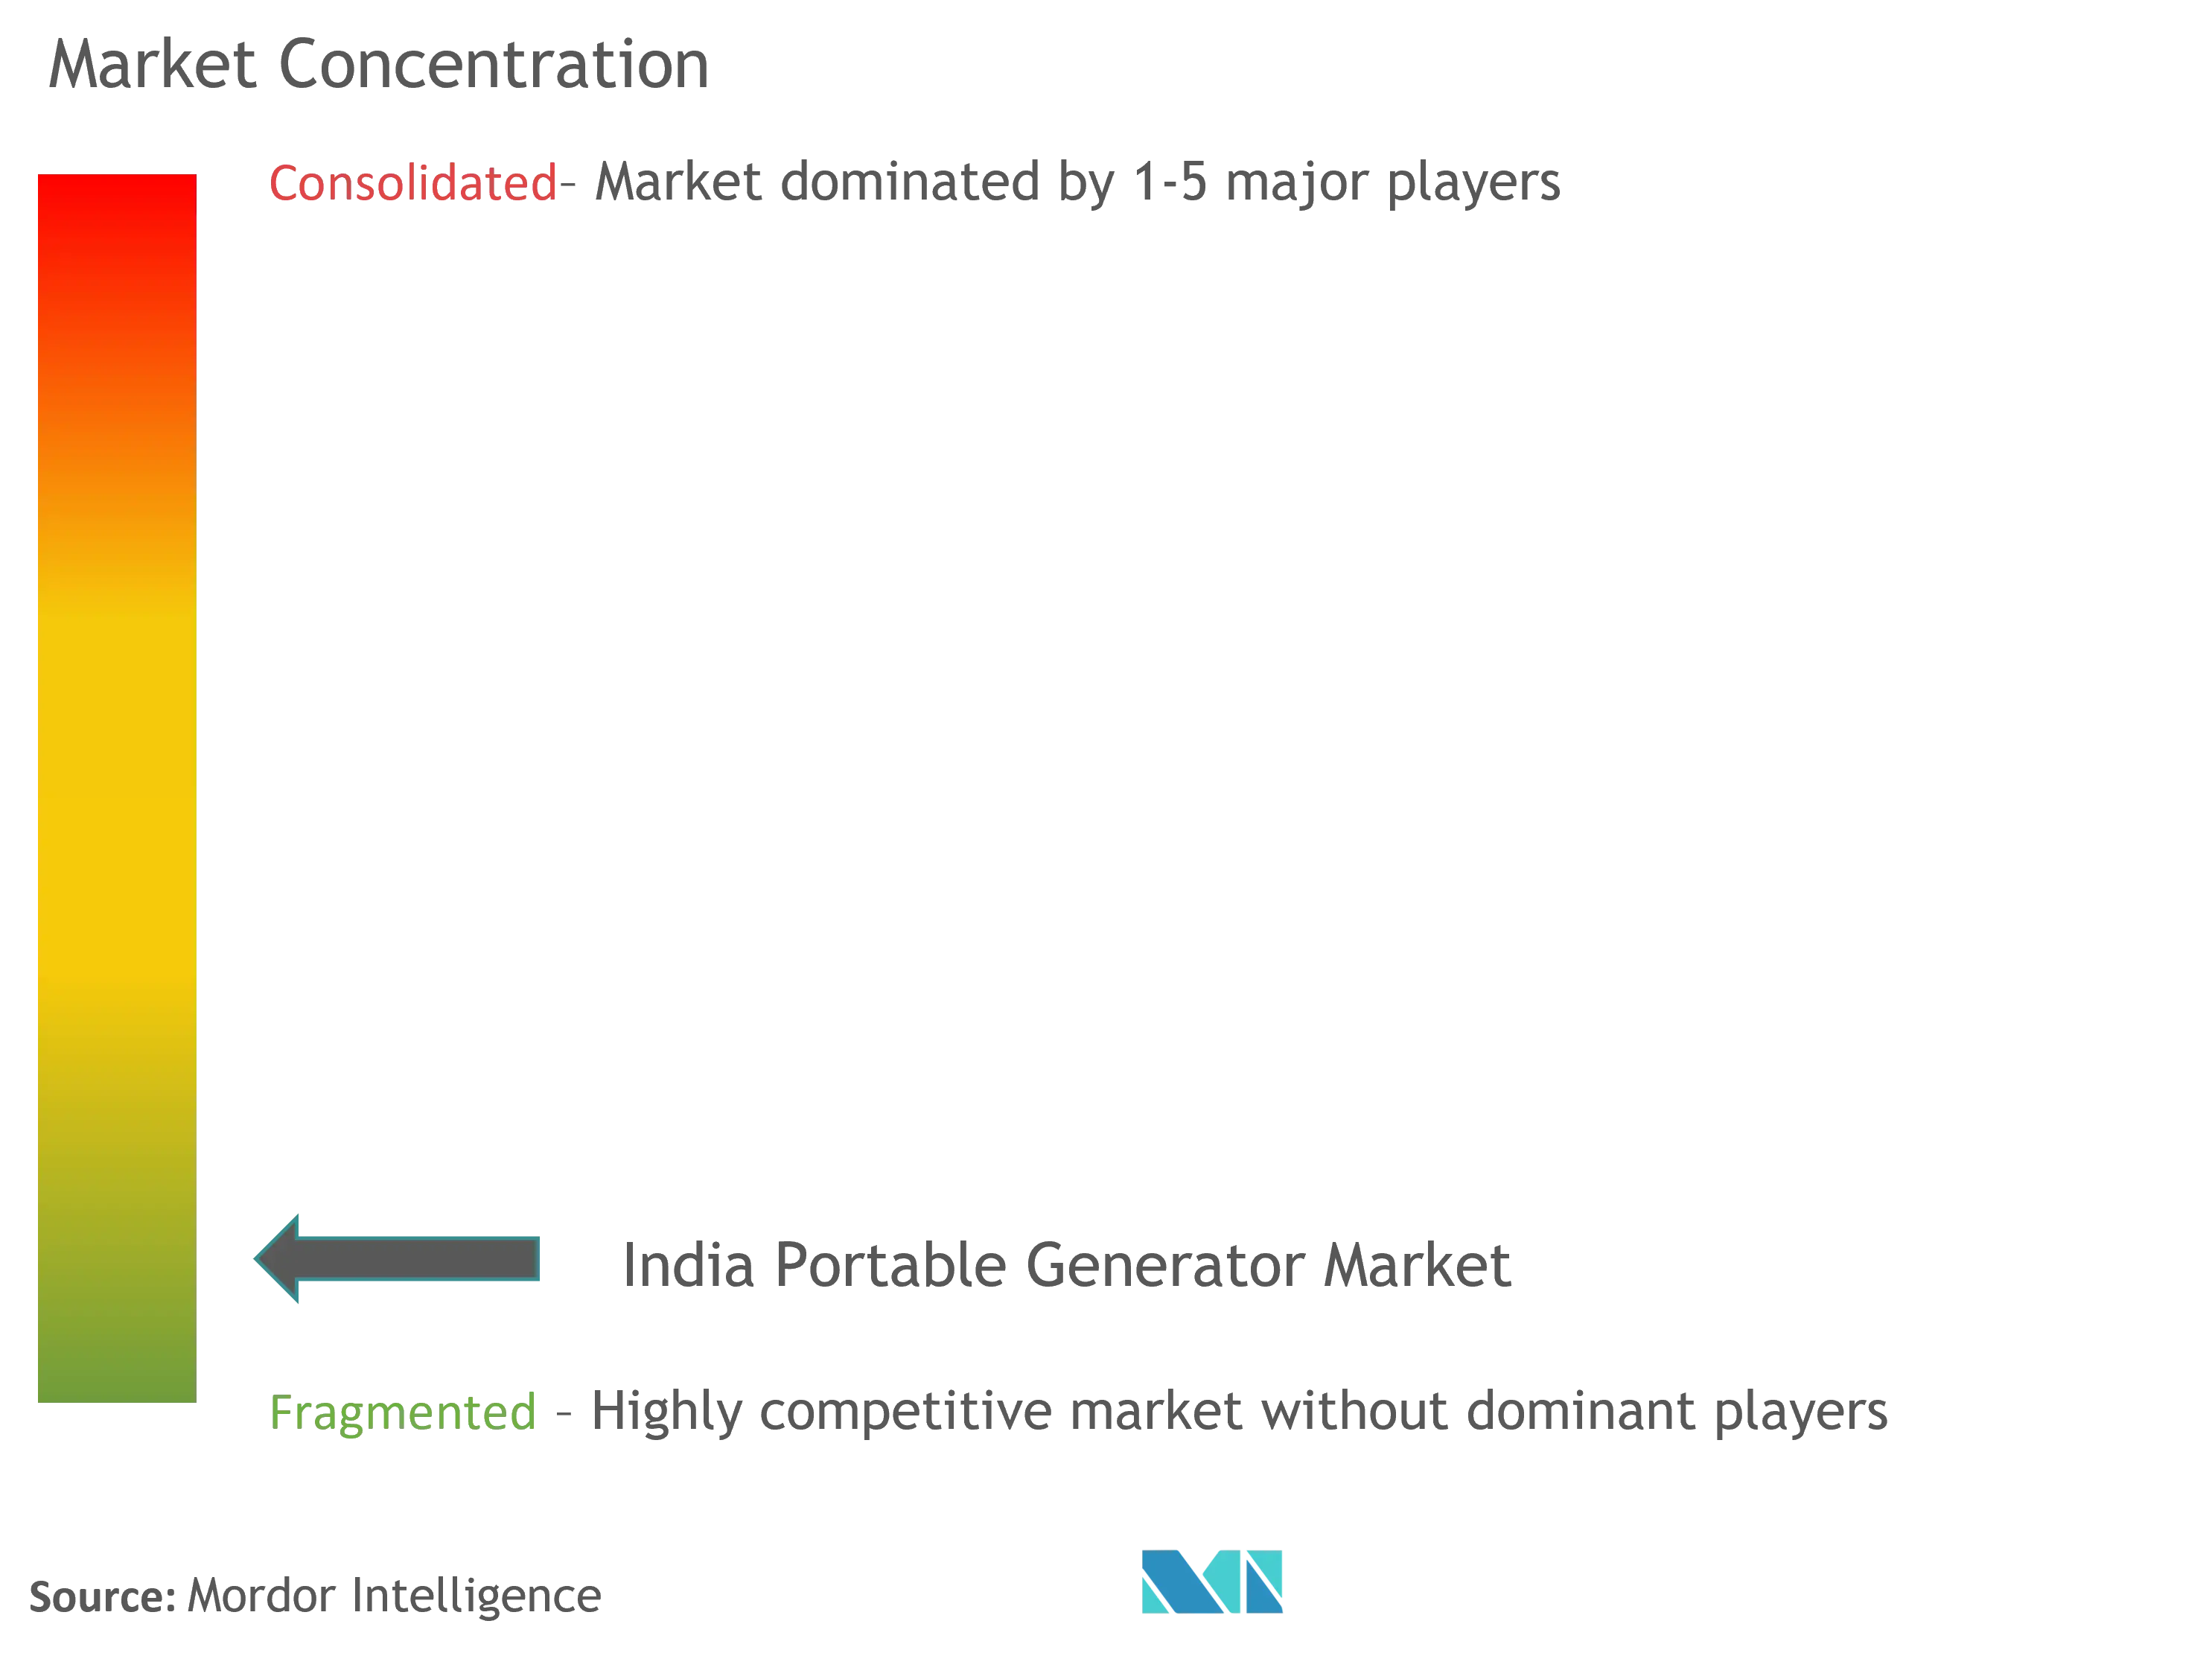 India Portable Generator Market Concentration